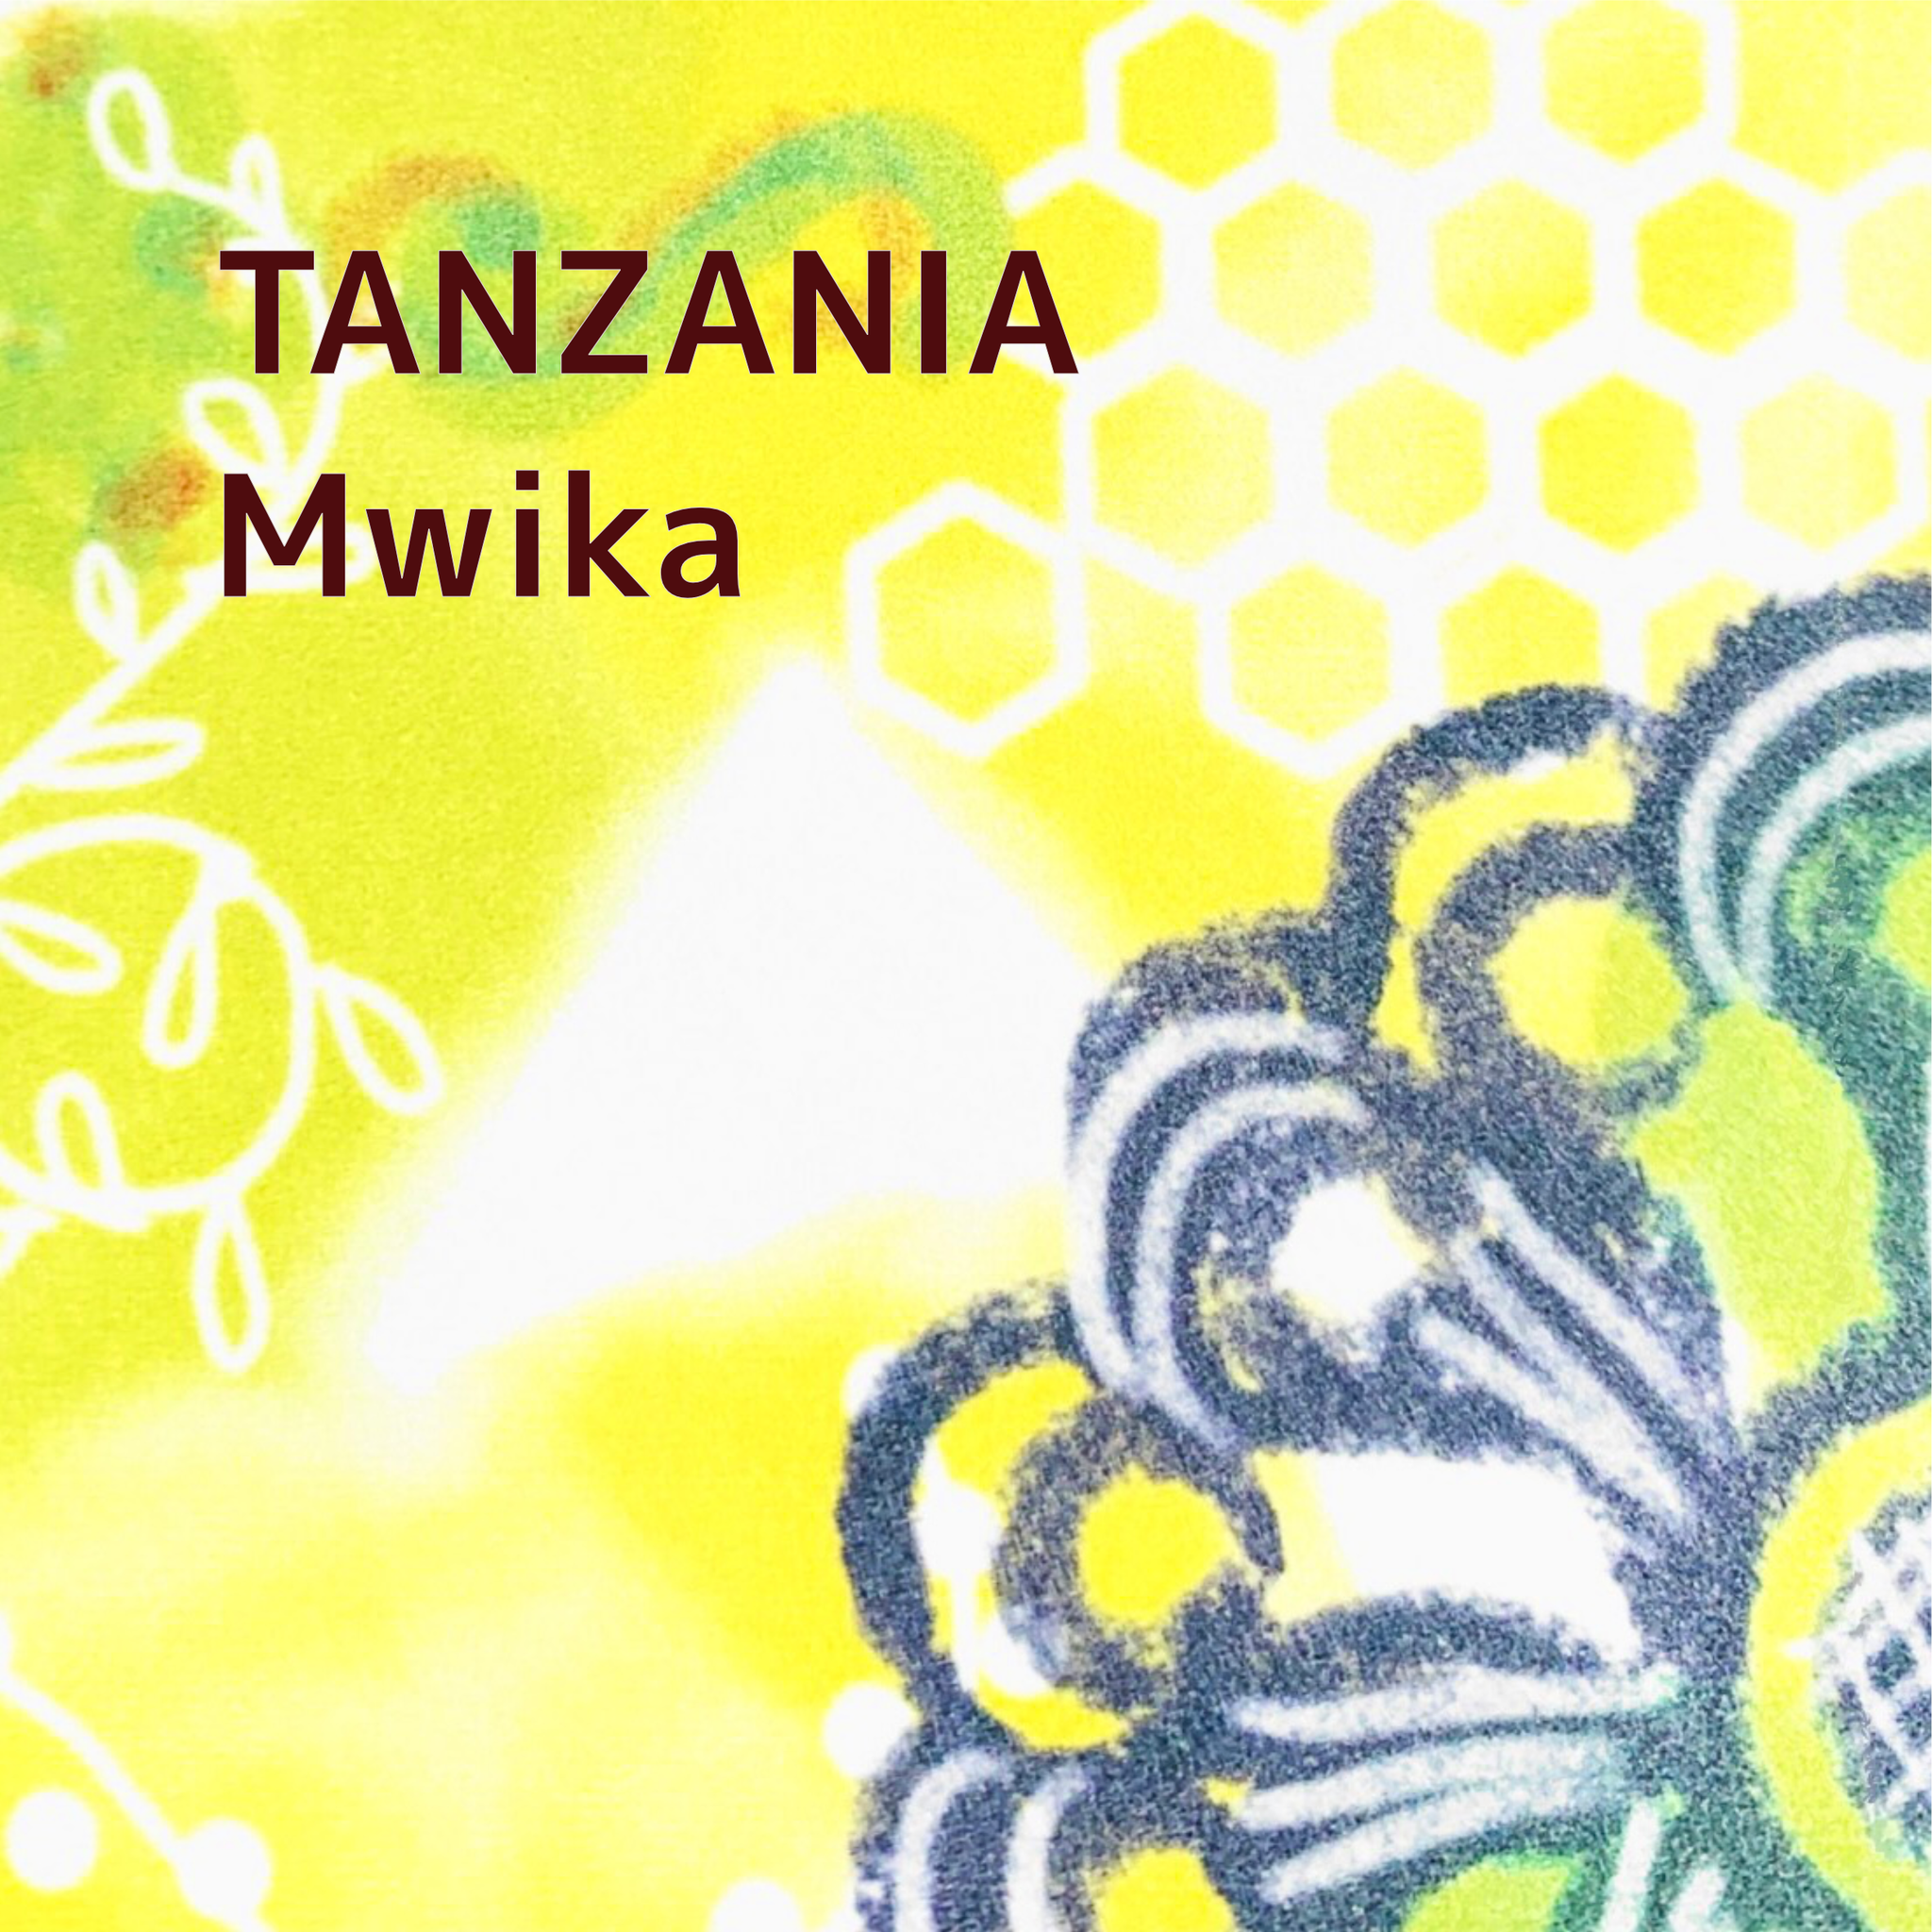 TANZANIA/Mwika